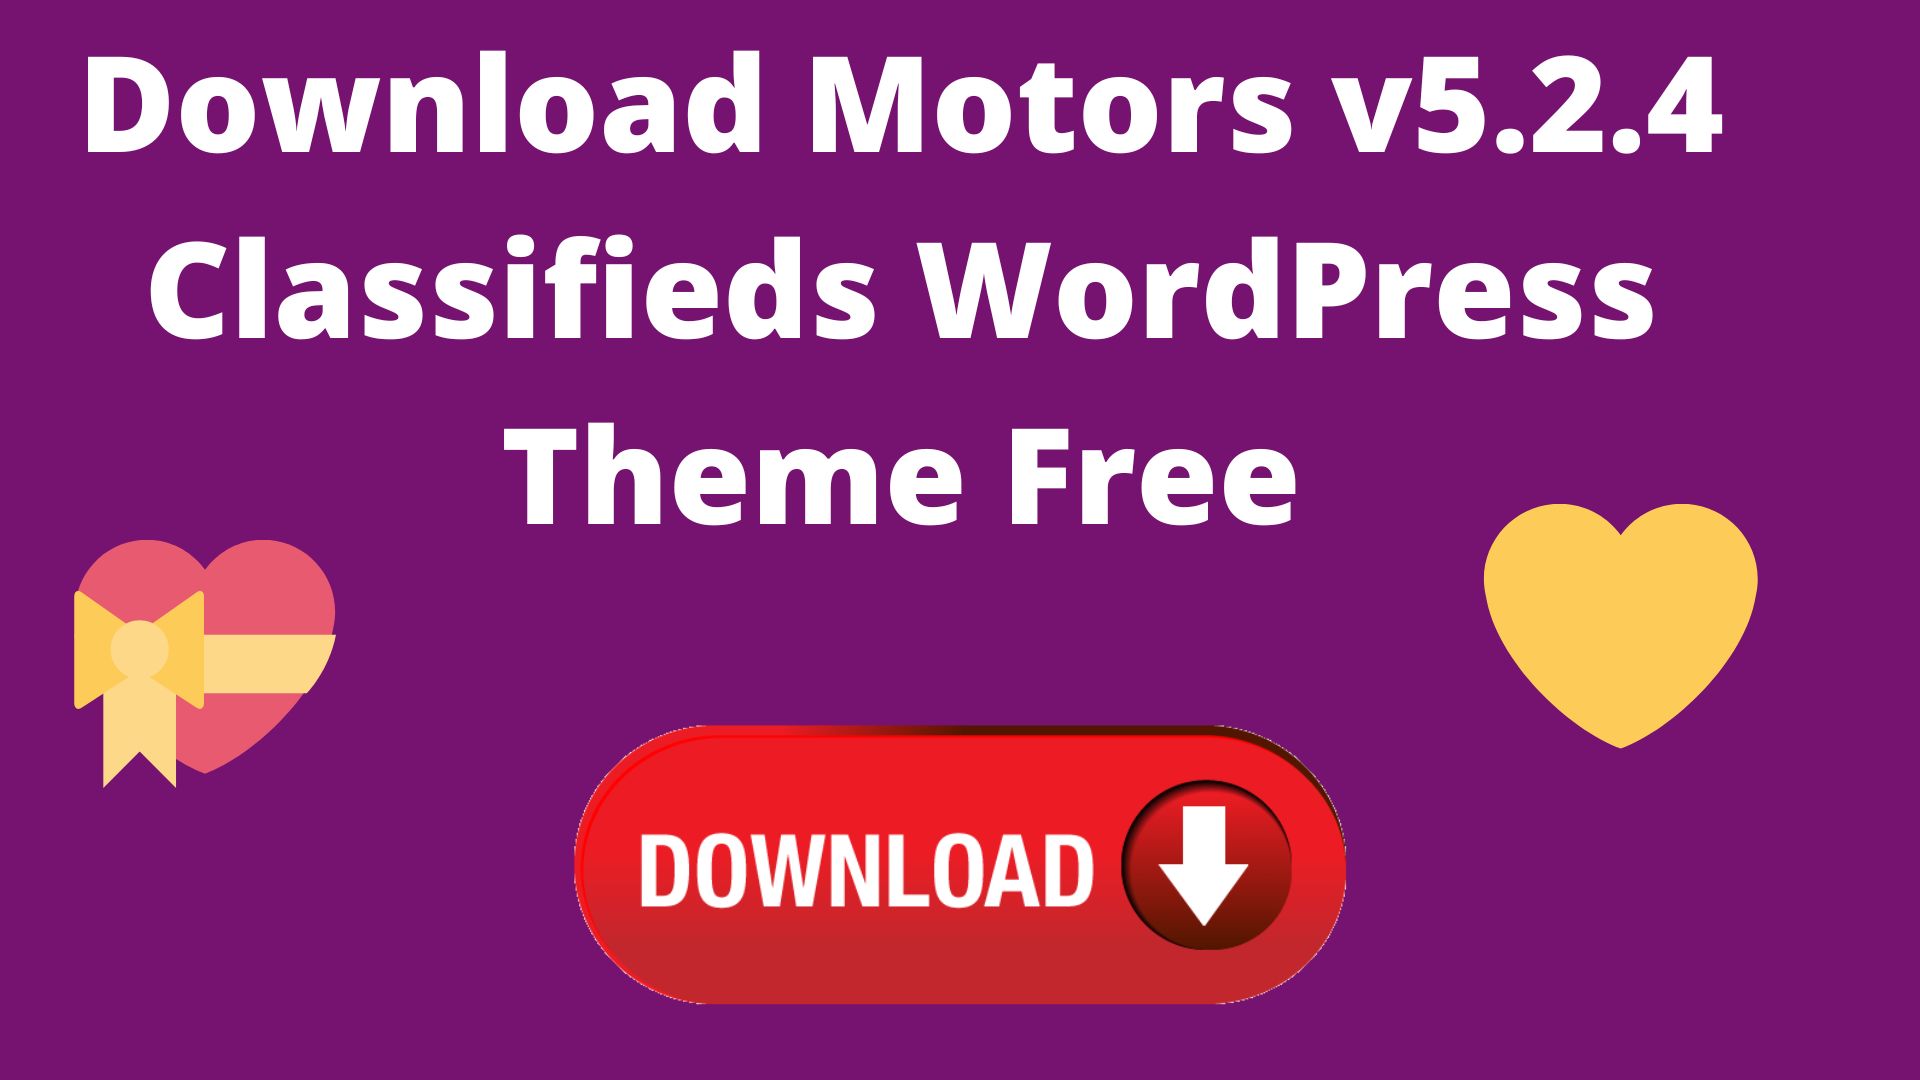 Download Motors V5.2.4 Classifieds Wordpress Theme Free